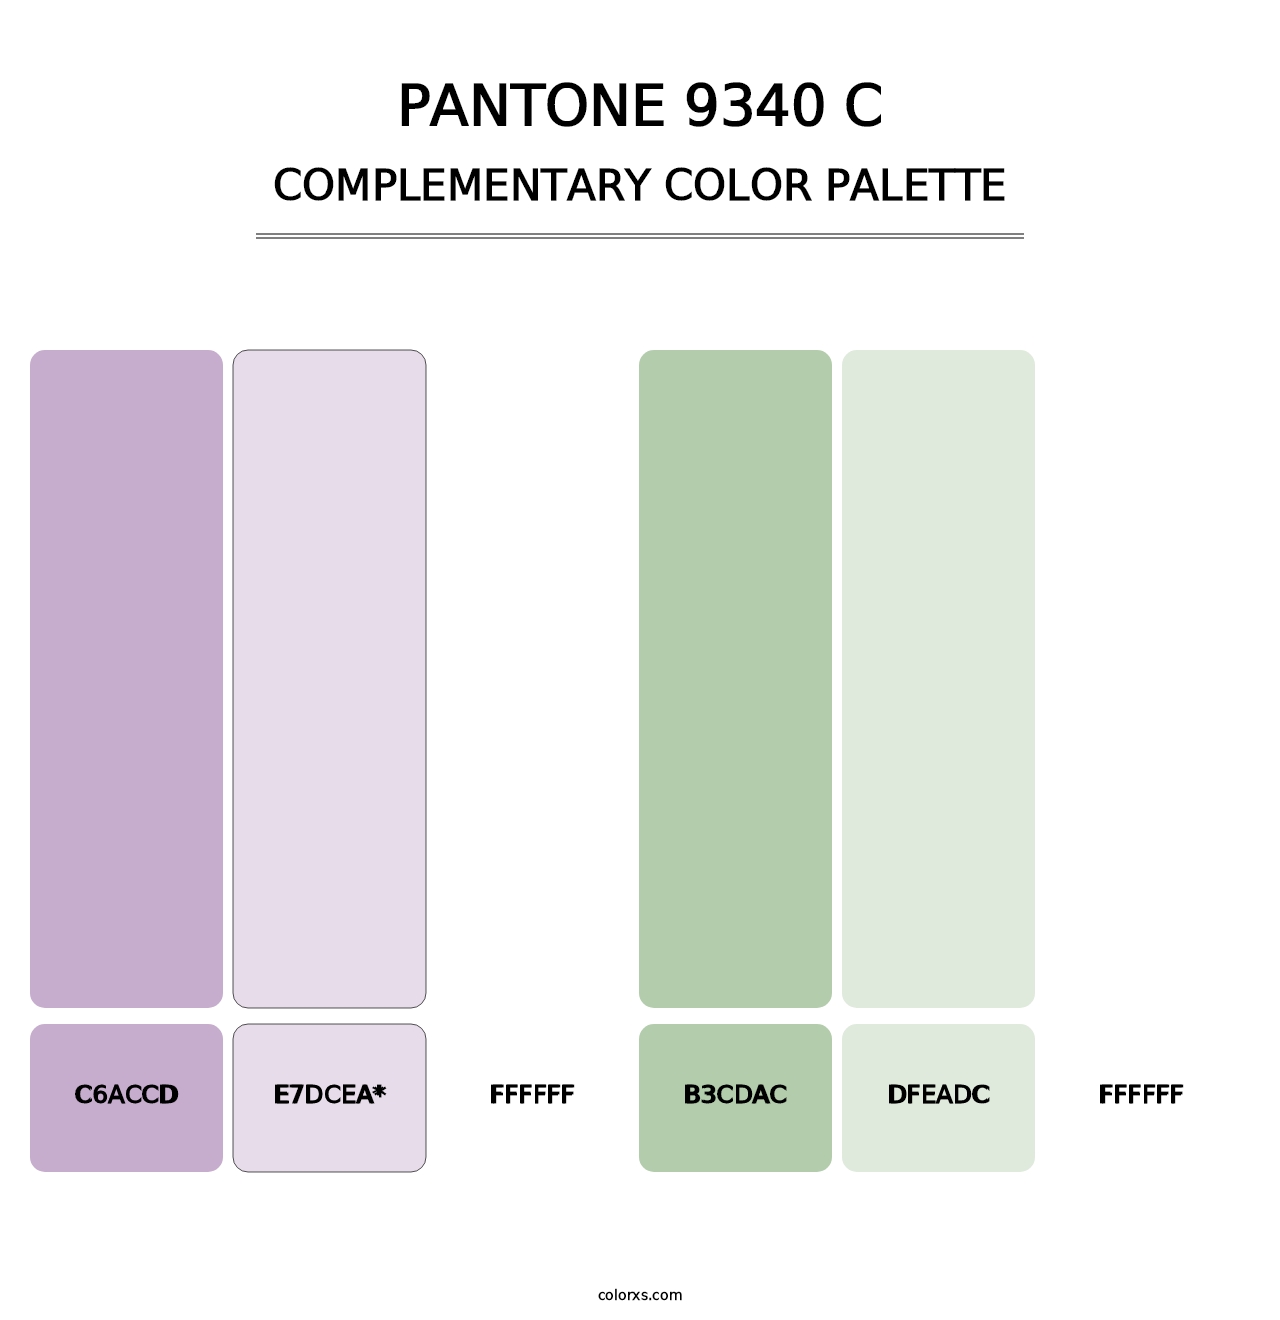 PANTONE 9340 C - Complementary Color Palette